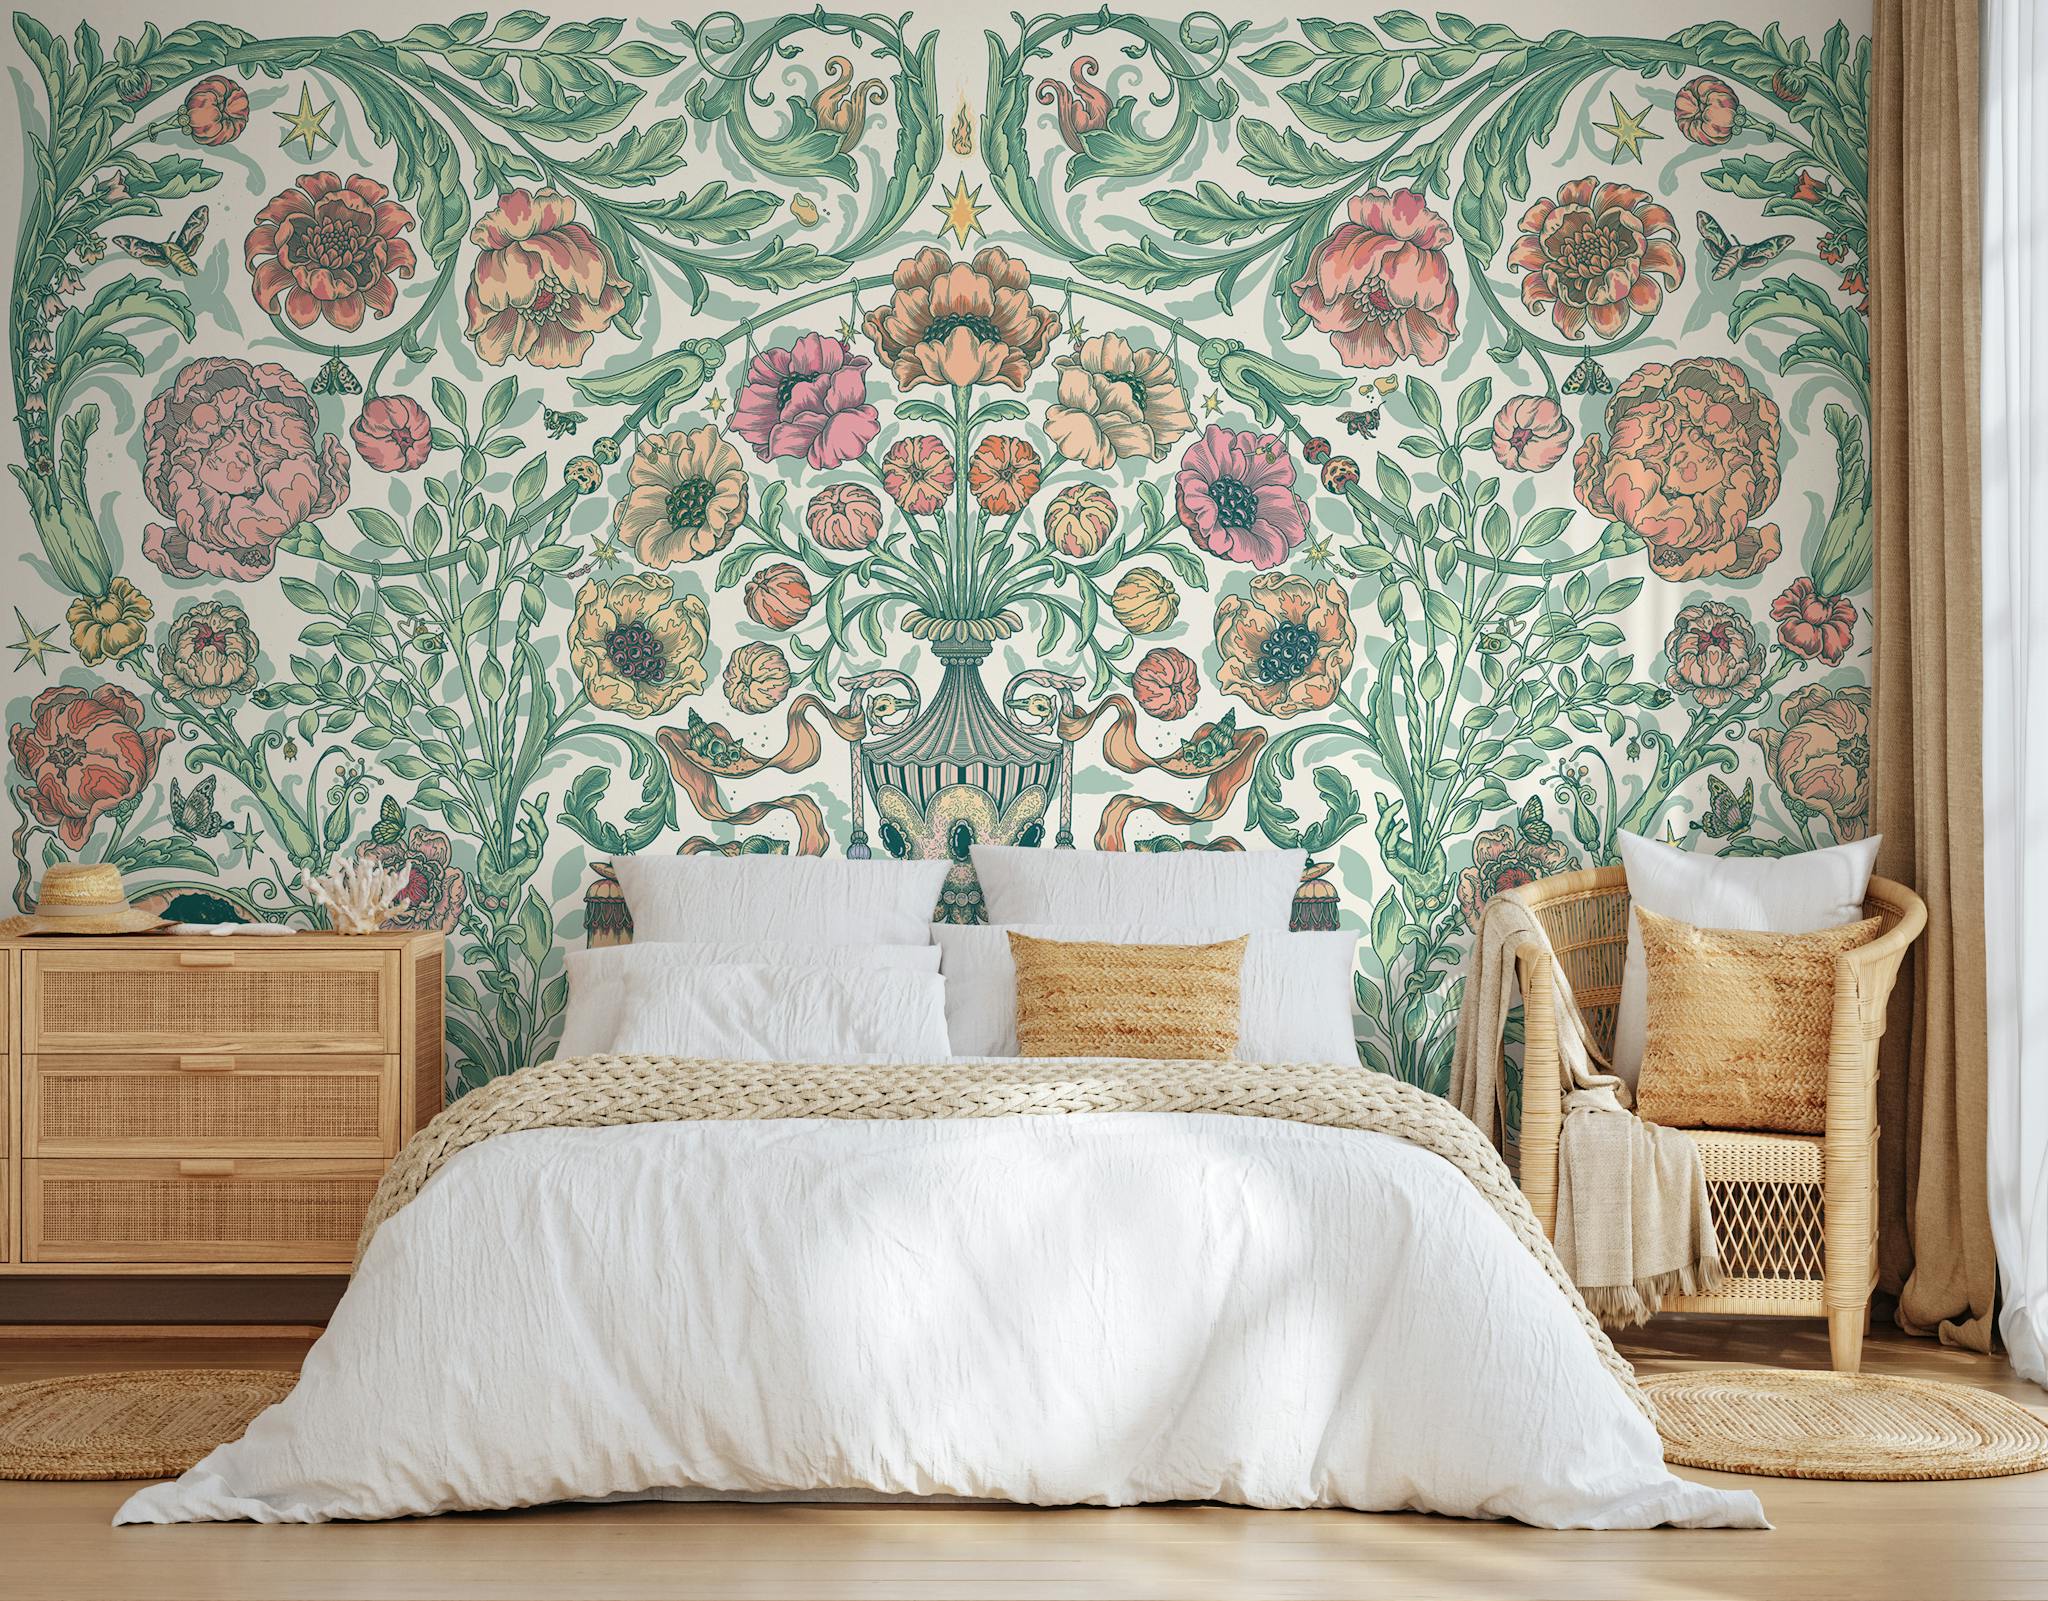 "le jardin merveilleux" fresco on a bedroom wall